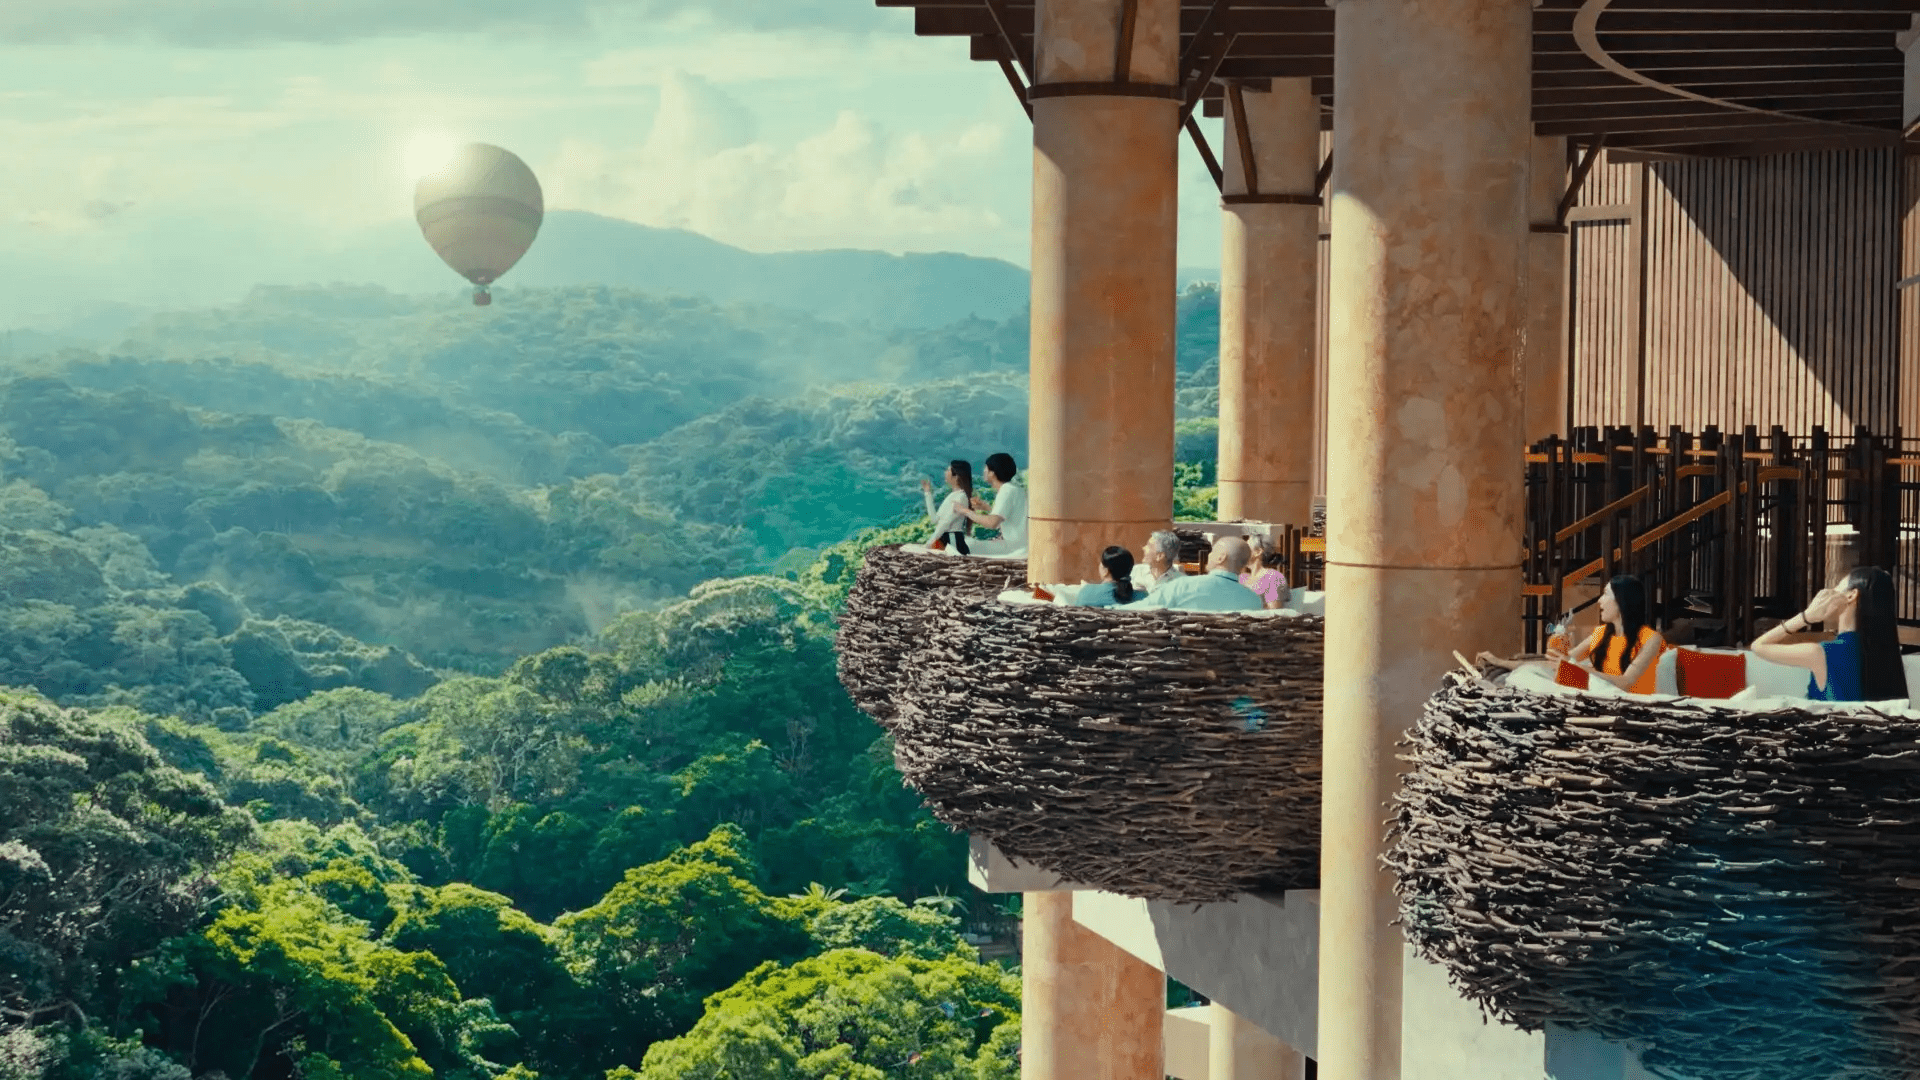 junglia theme park - balloon